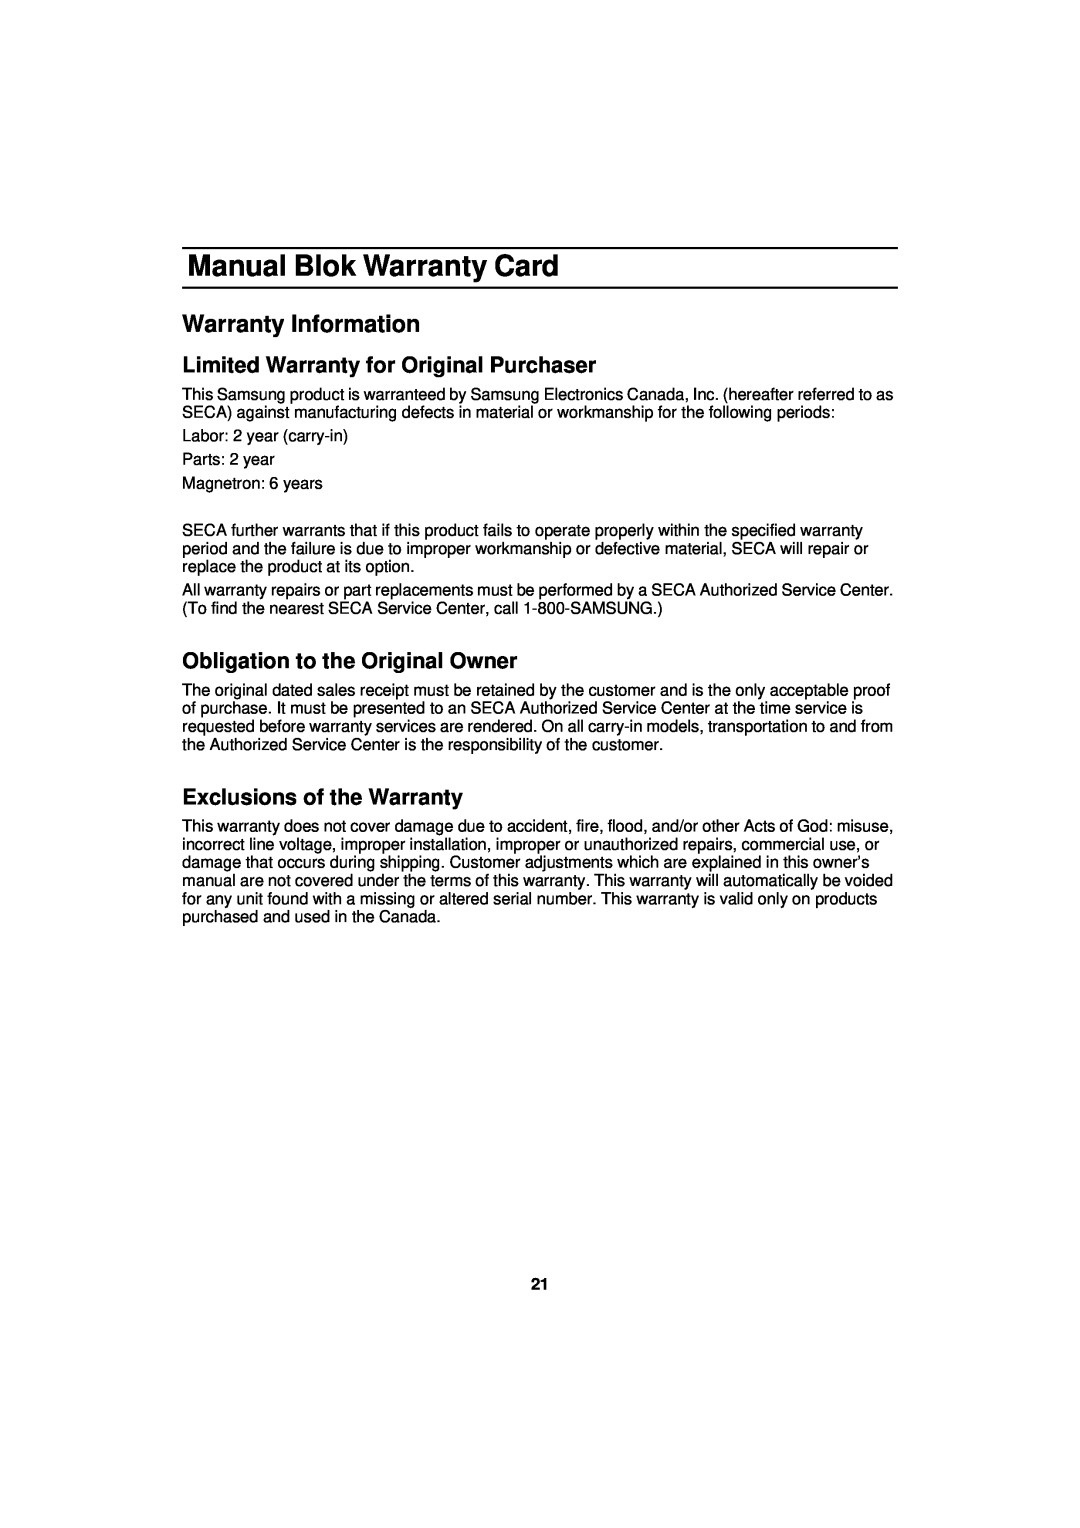 Samsung MW830BA manual Manual Blok Warranty Card, Warranty Information, Limited Warranty for Original Purchaser 